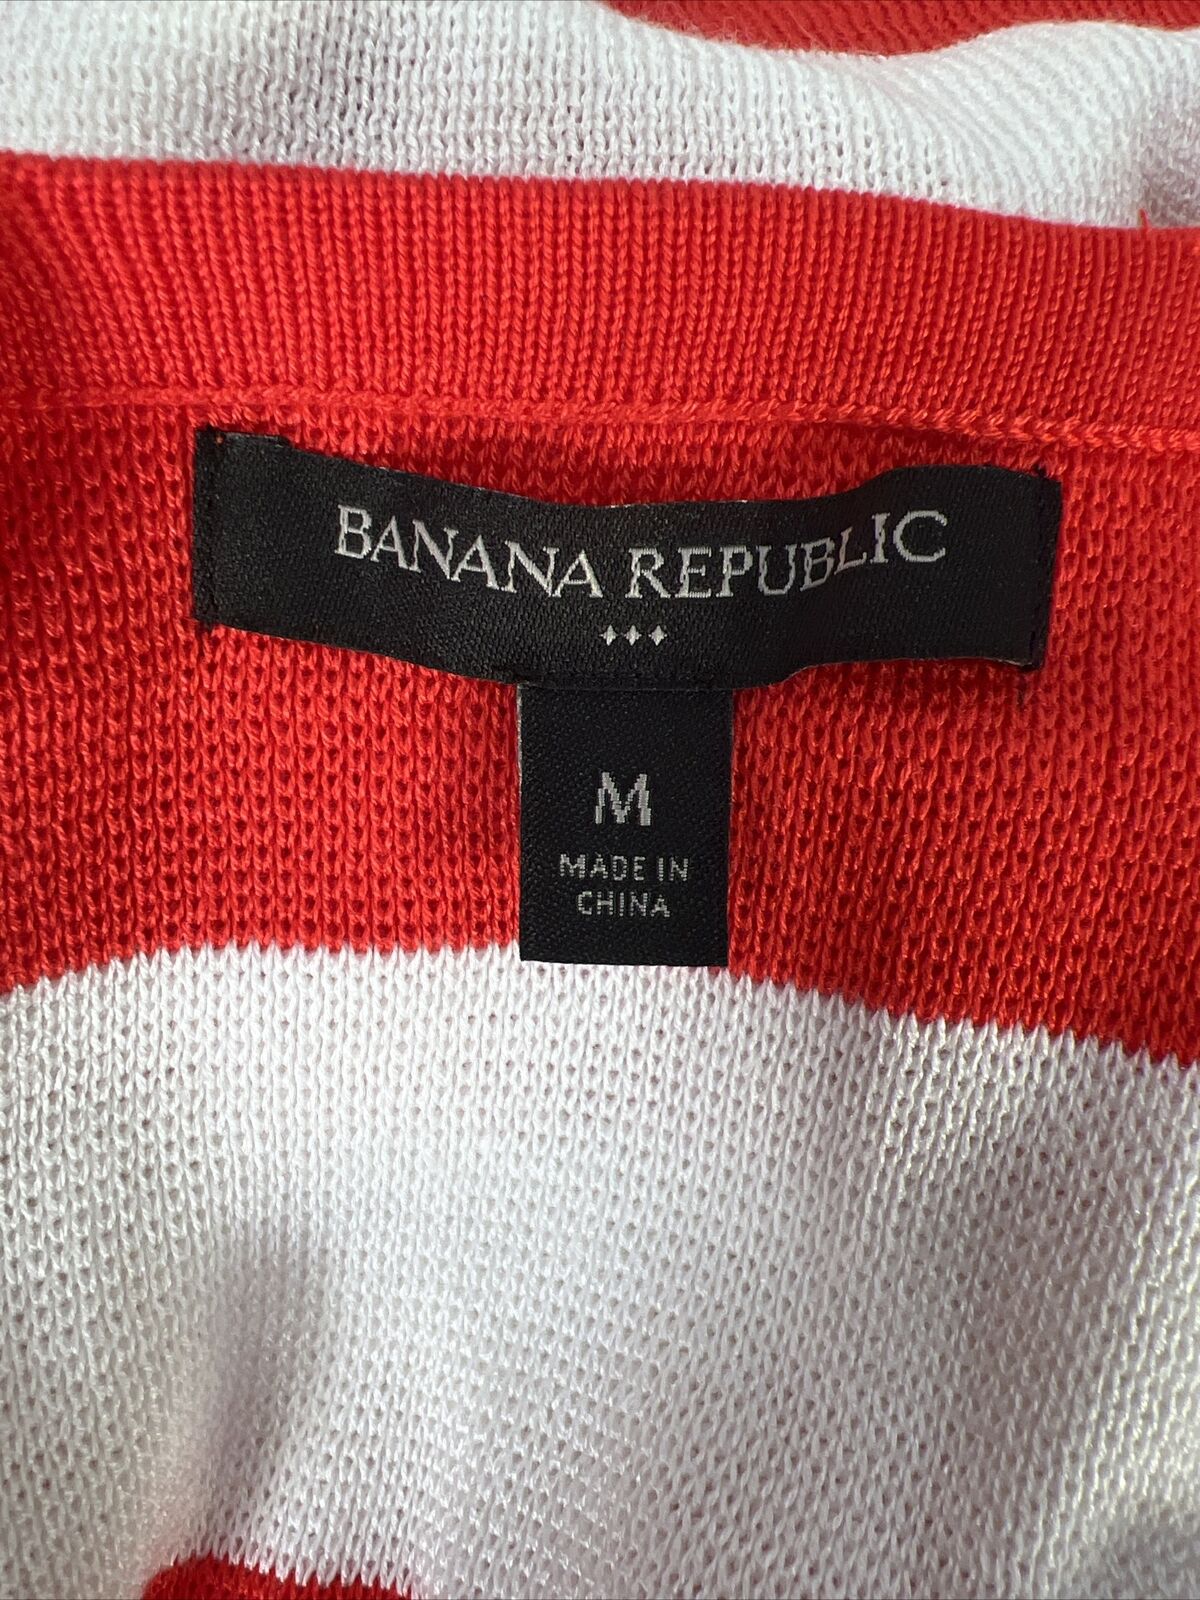 Banana Republic Women's Red/White Striped Sweater Tank Top - M